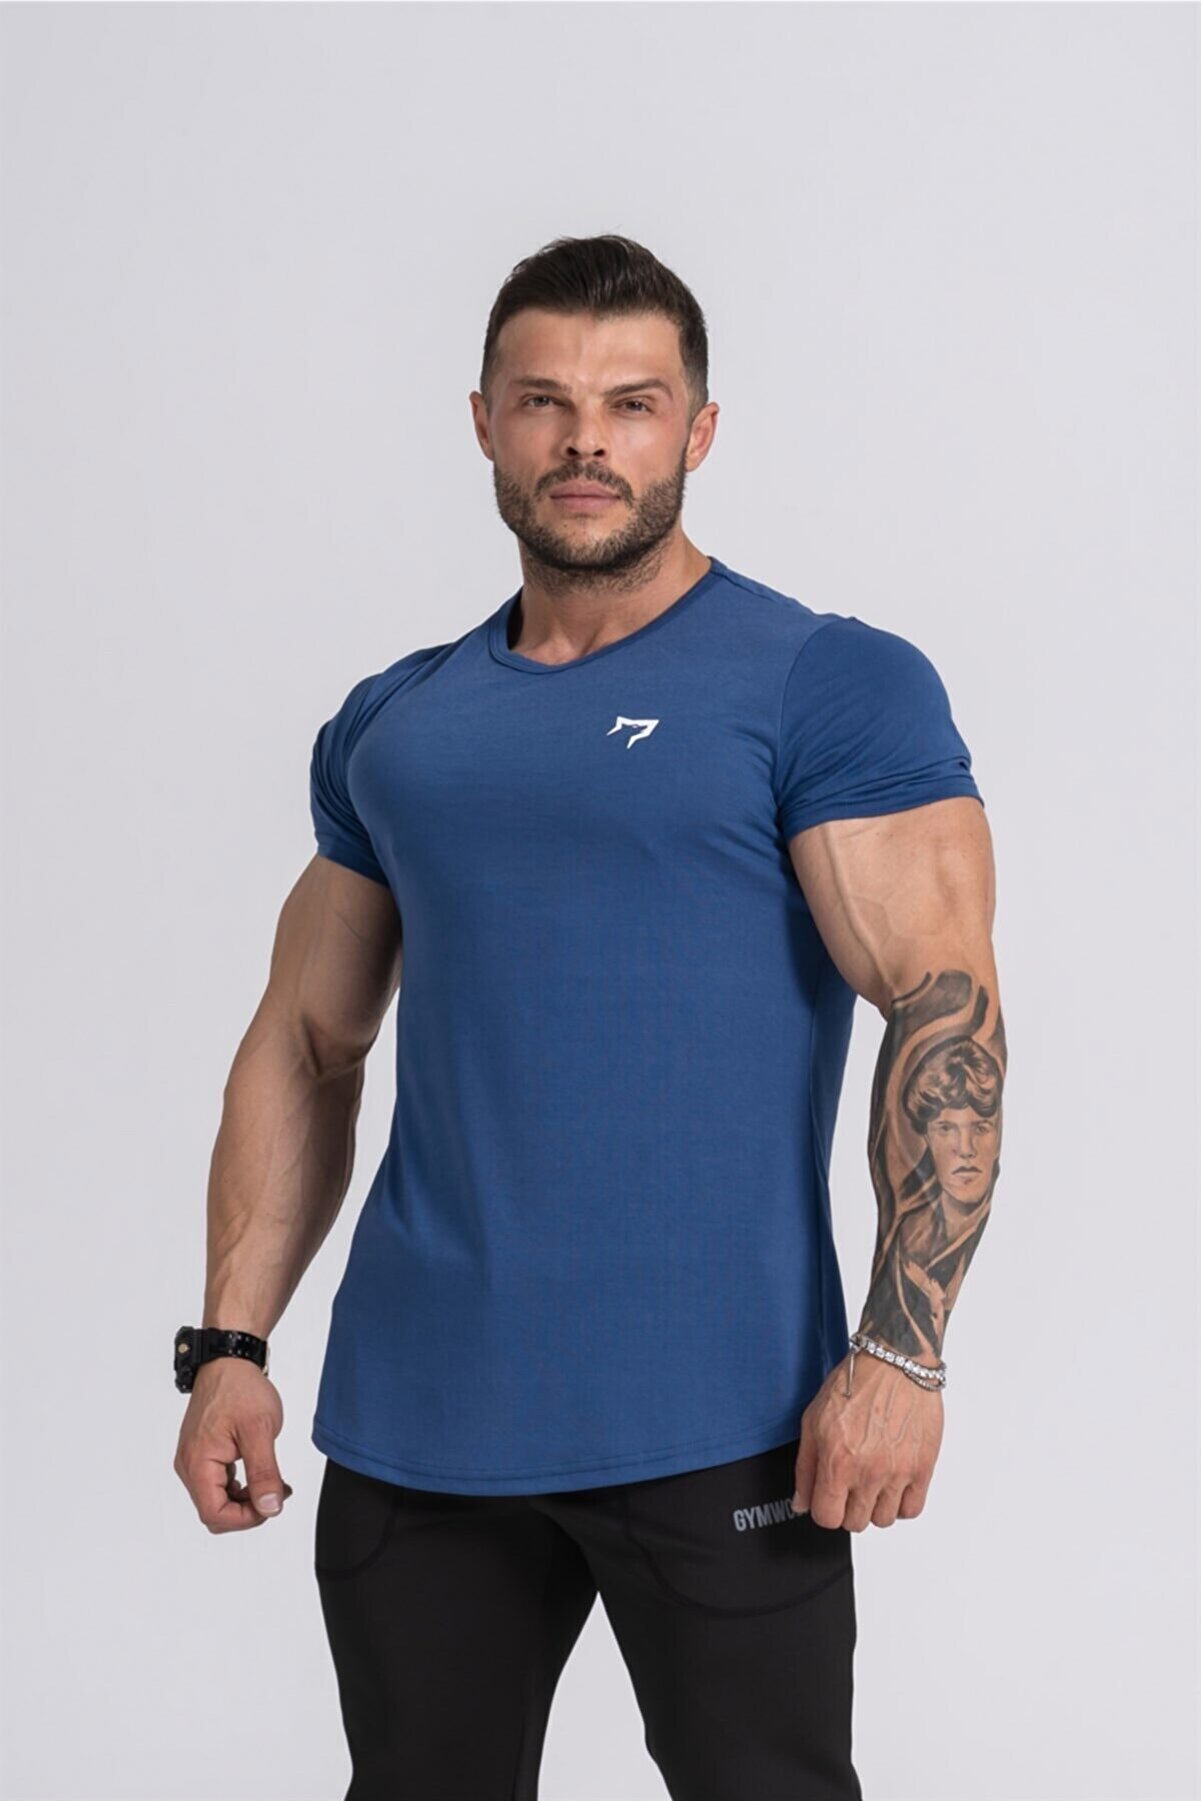 Gymwolves Erkek Spor T-shirt | Workout Tanktop |